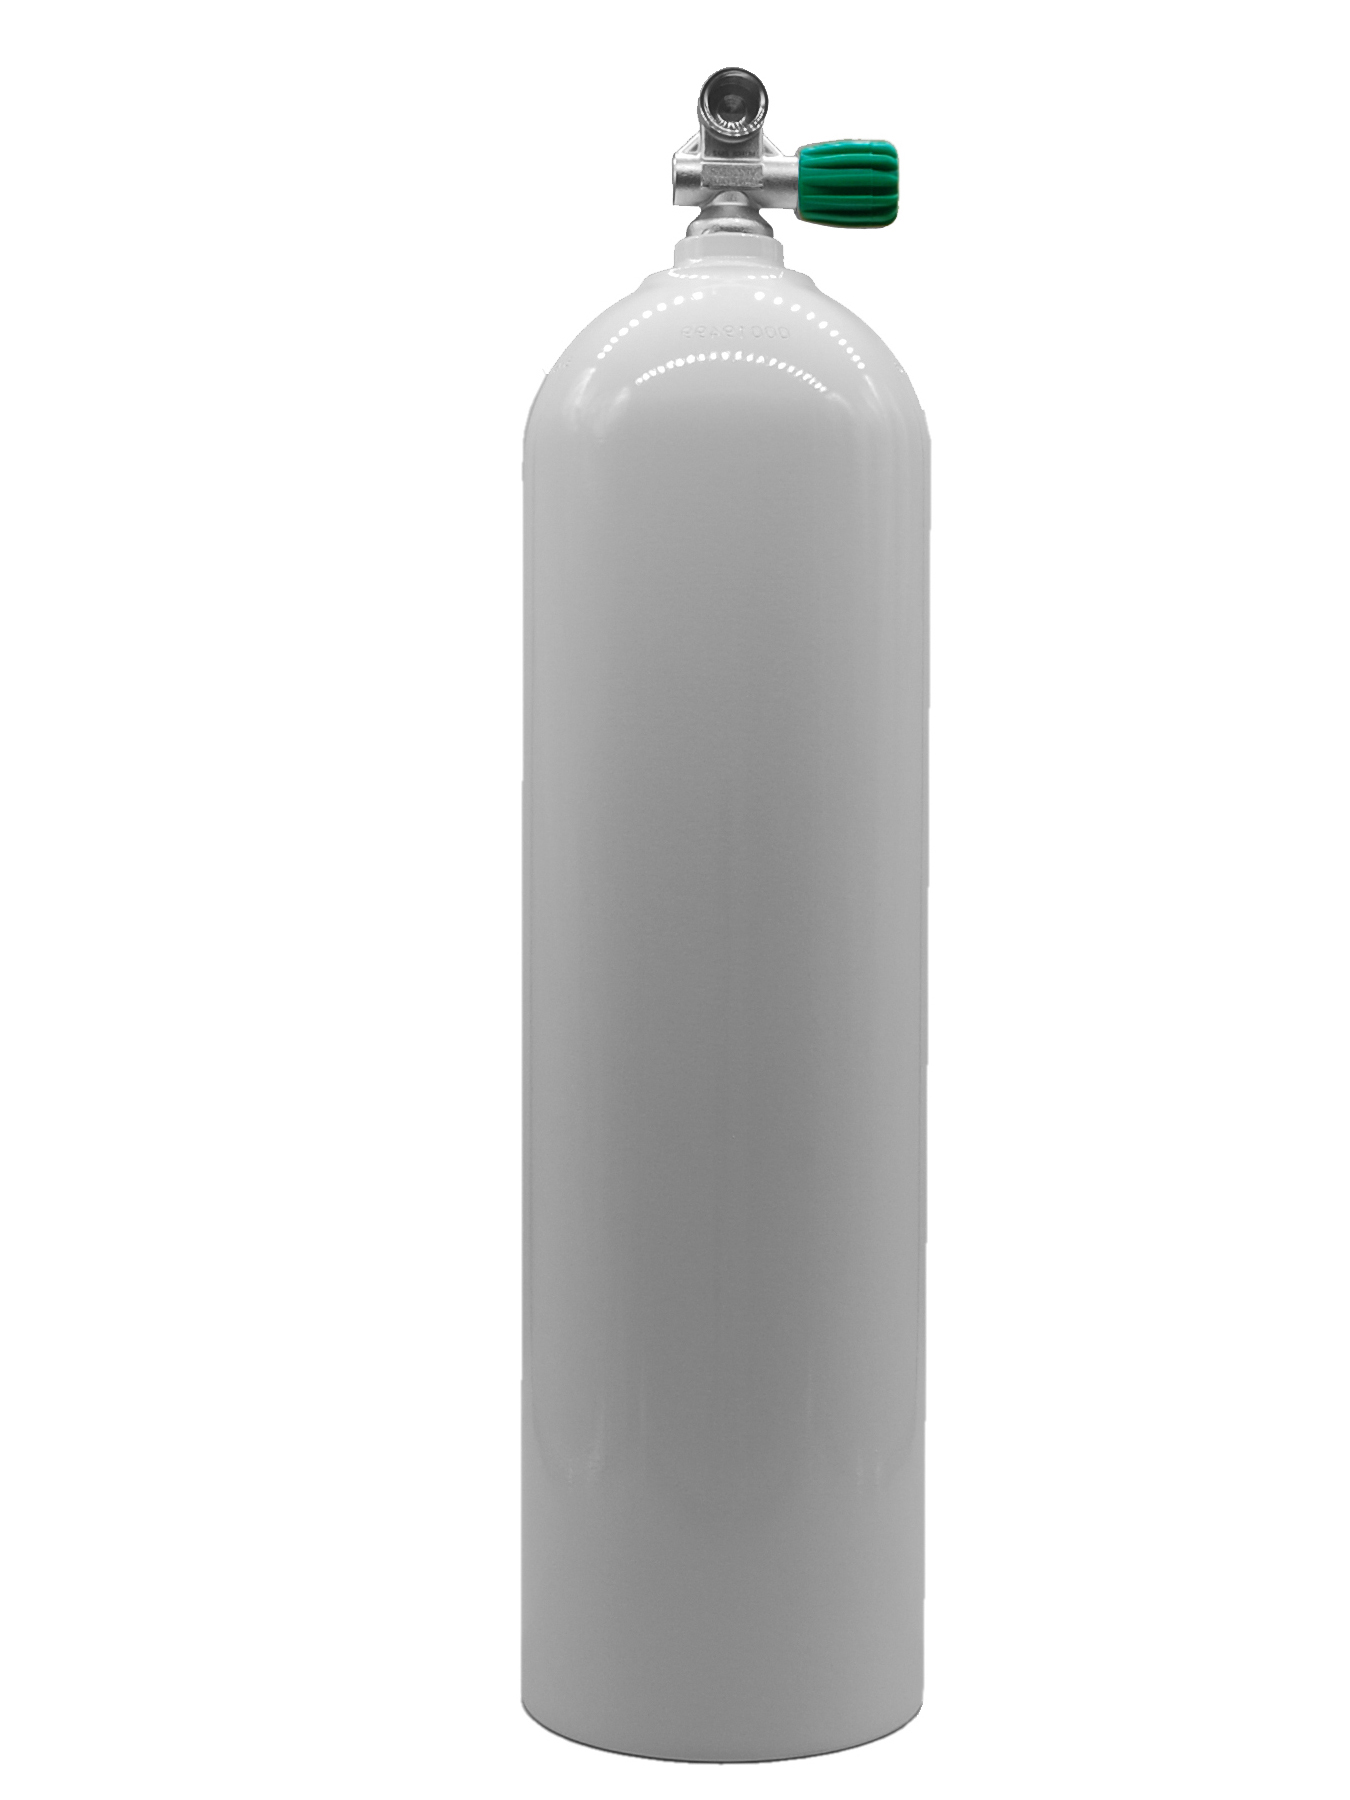 MES 11,1L Aluflasche weiss 207 bar mit Nitrox Ventil rechts